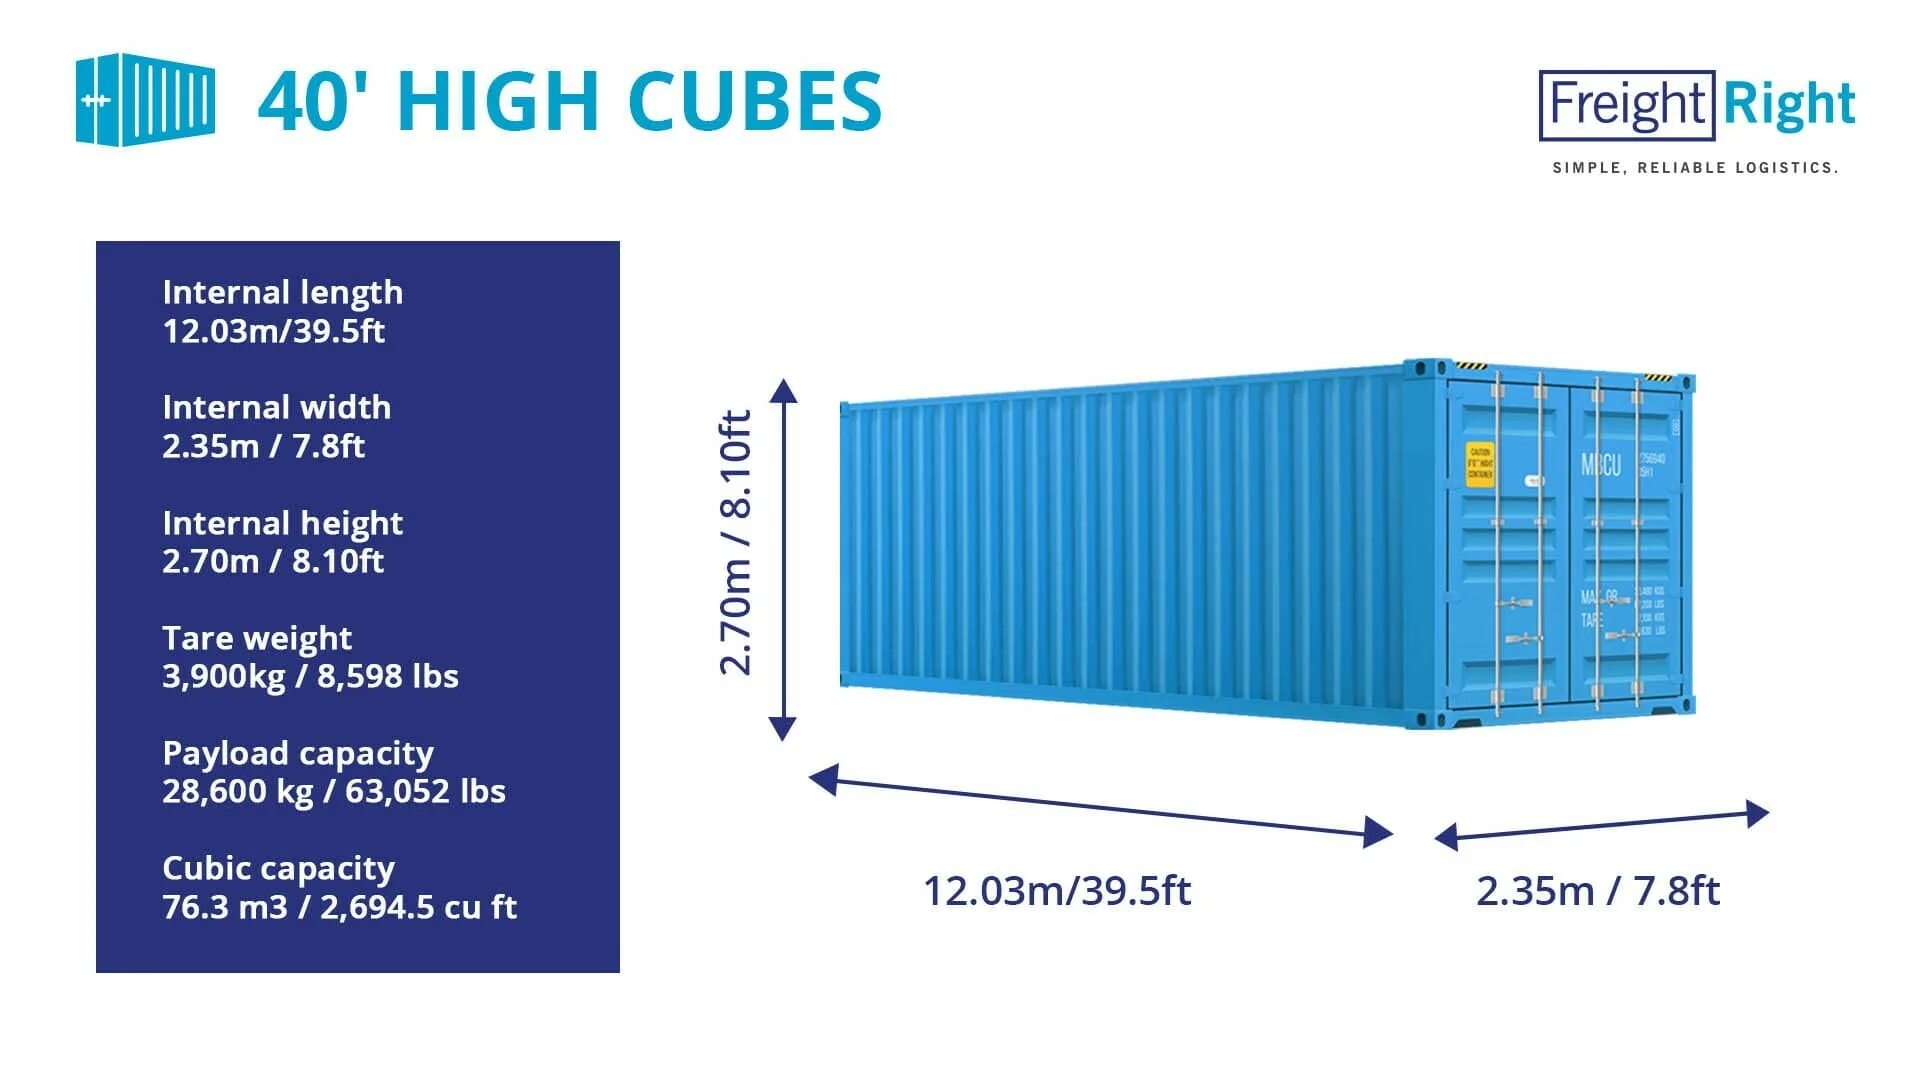 Контейнер 40 HC/hq (High Cube). Контейнер 40 фут Хай Кьюб размер. Габариты 40 фут контейнера High Cube. Размеры морского контейнера 40 футов High Cube. Контейнер high cube 40